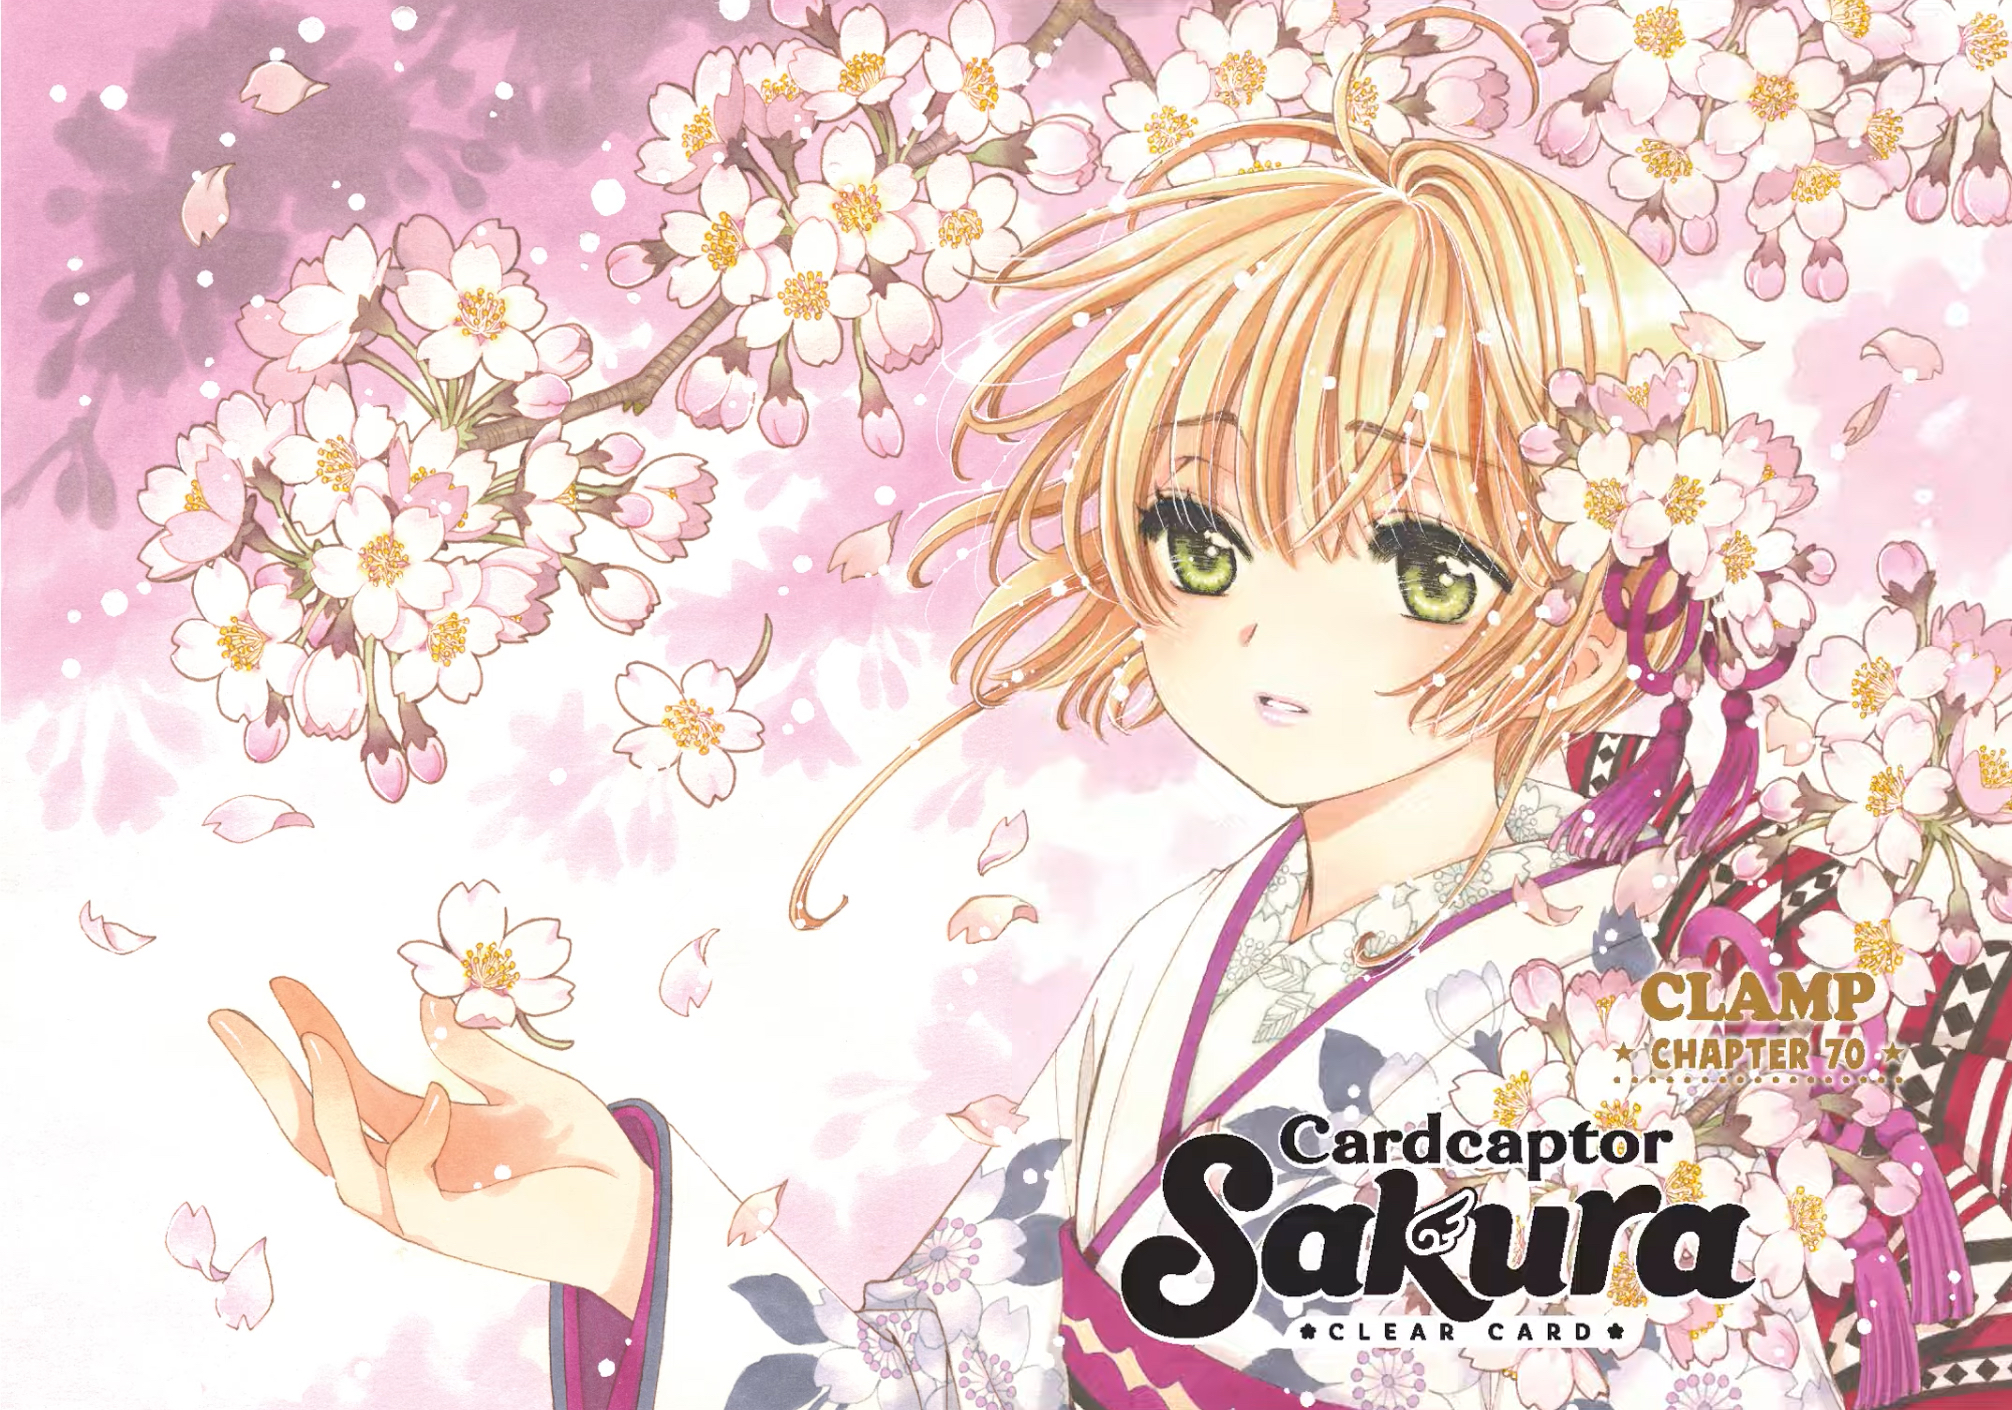 Cardcaptor Sakura: Clear Card Anime RETURNS 